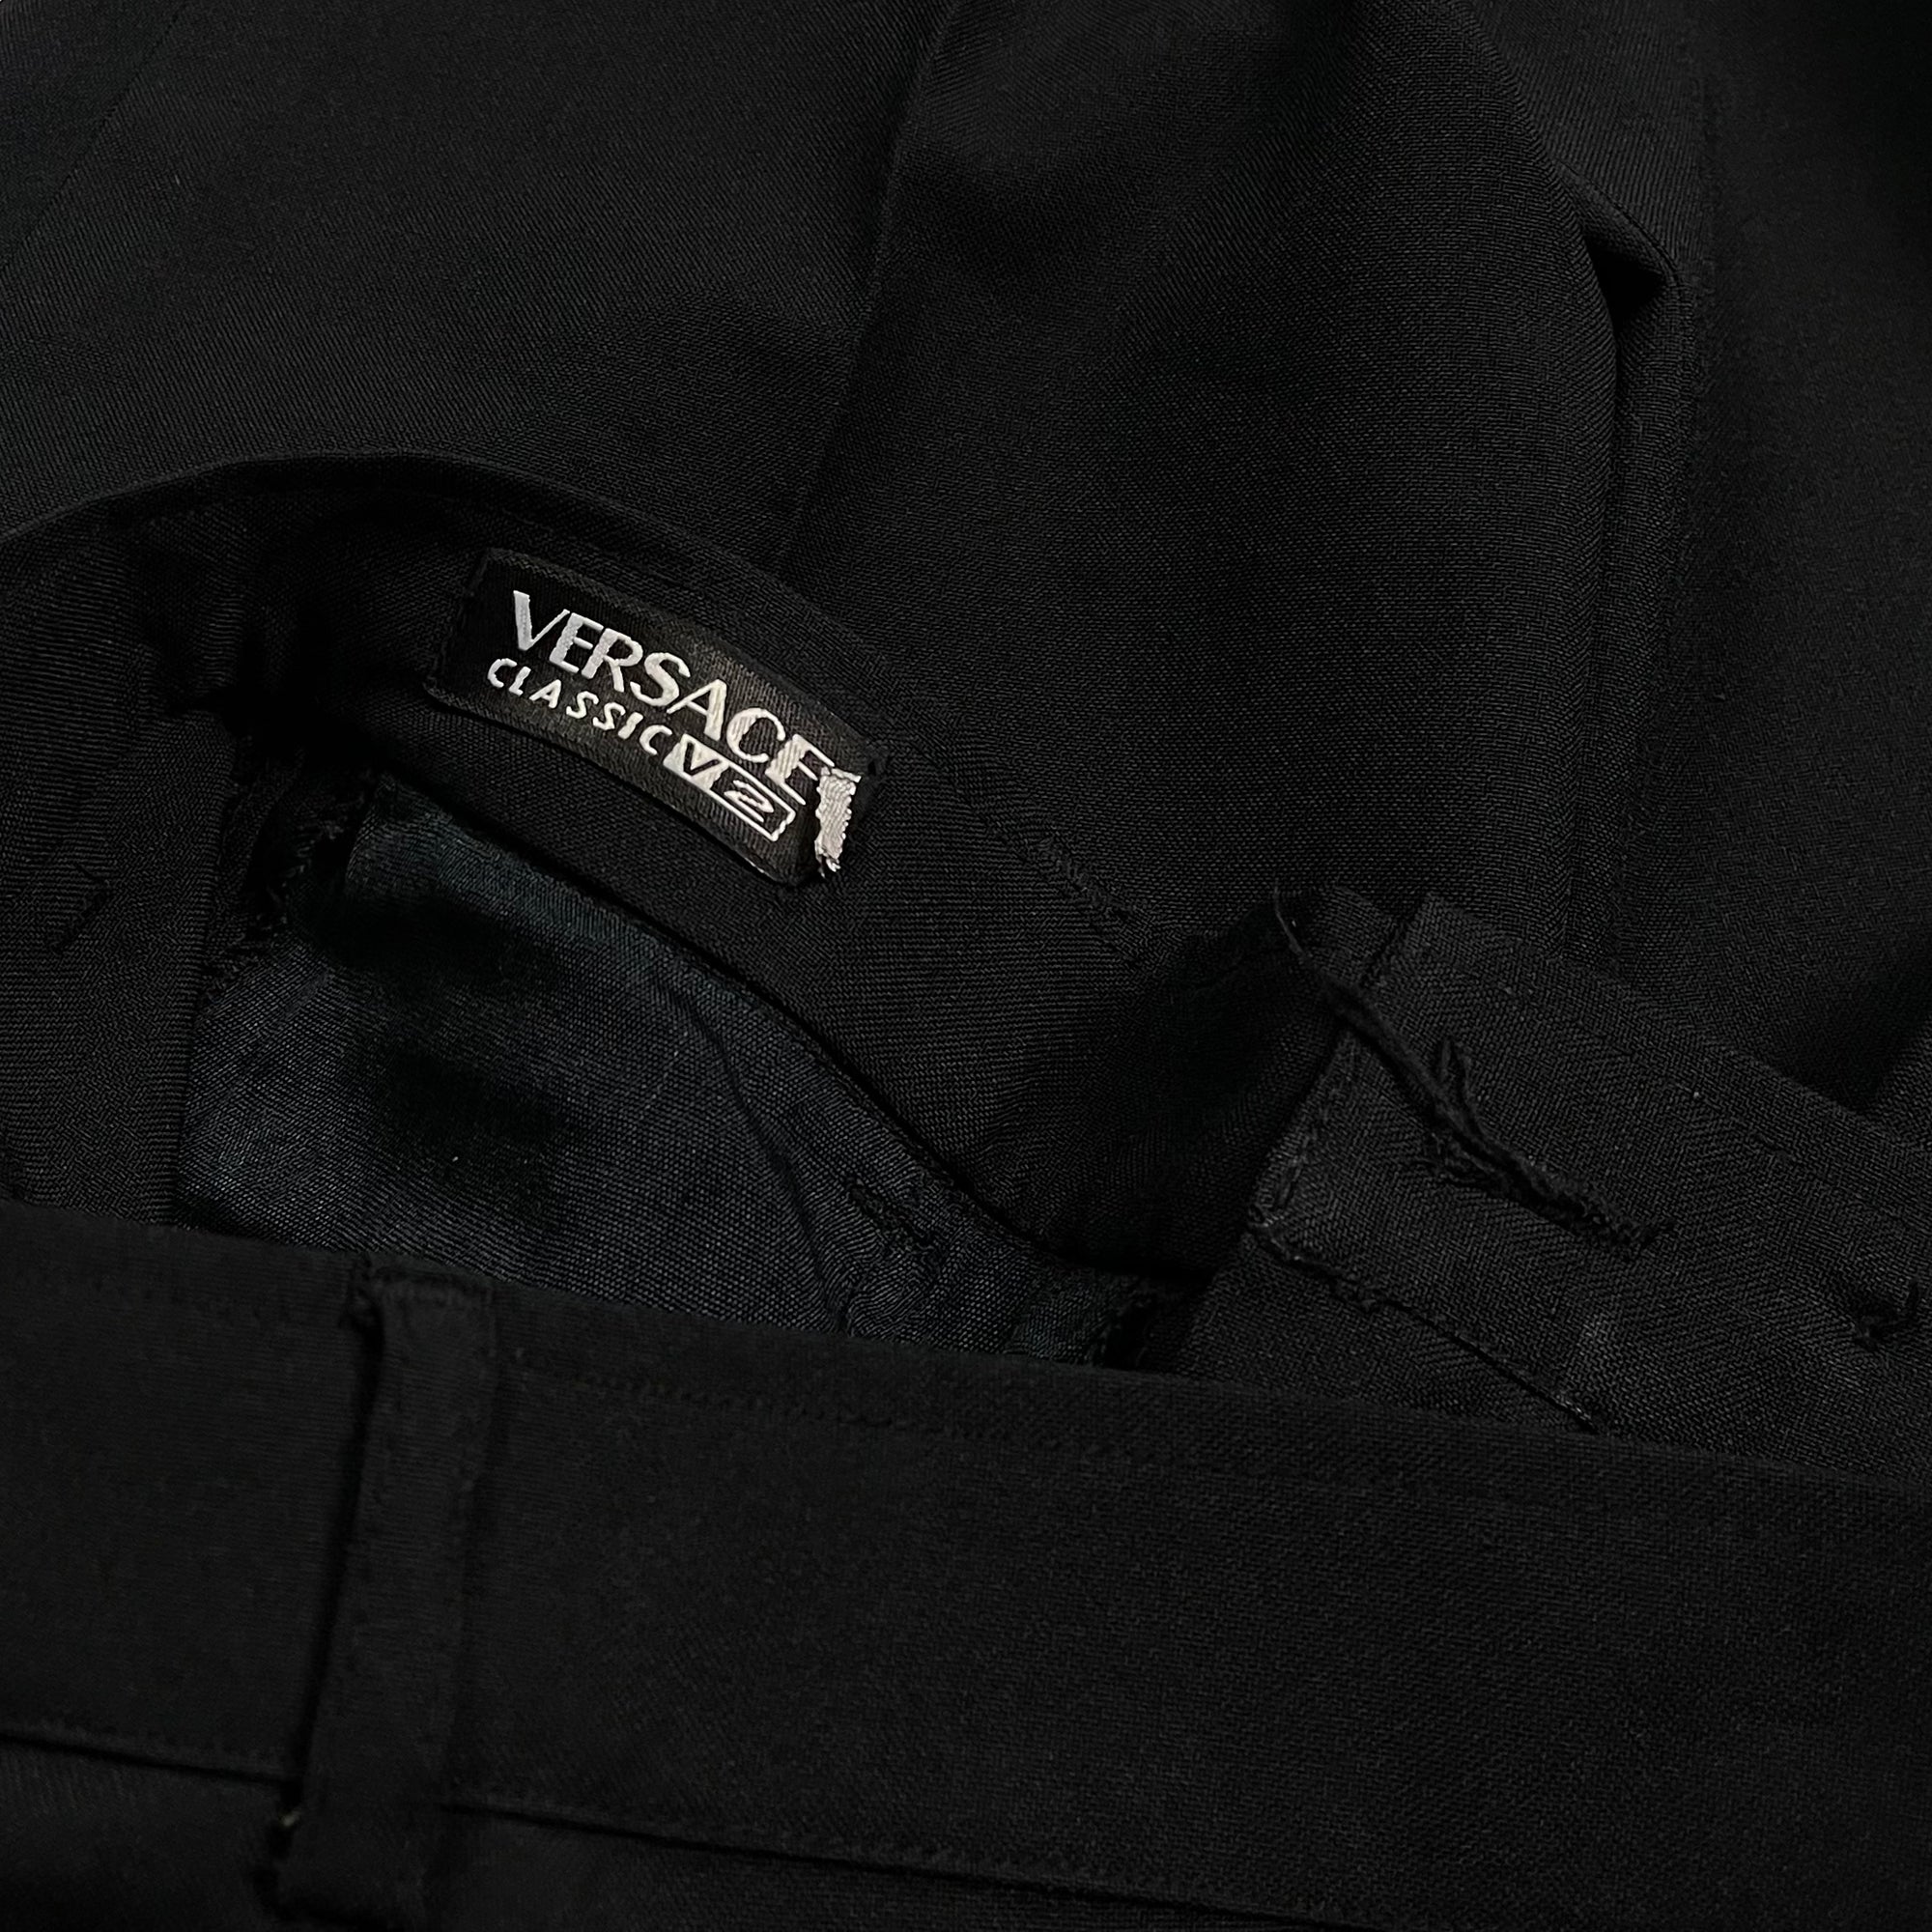 Pantalon - Versace - Noir